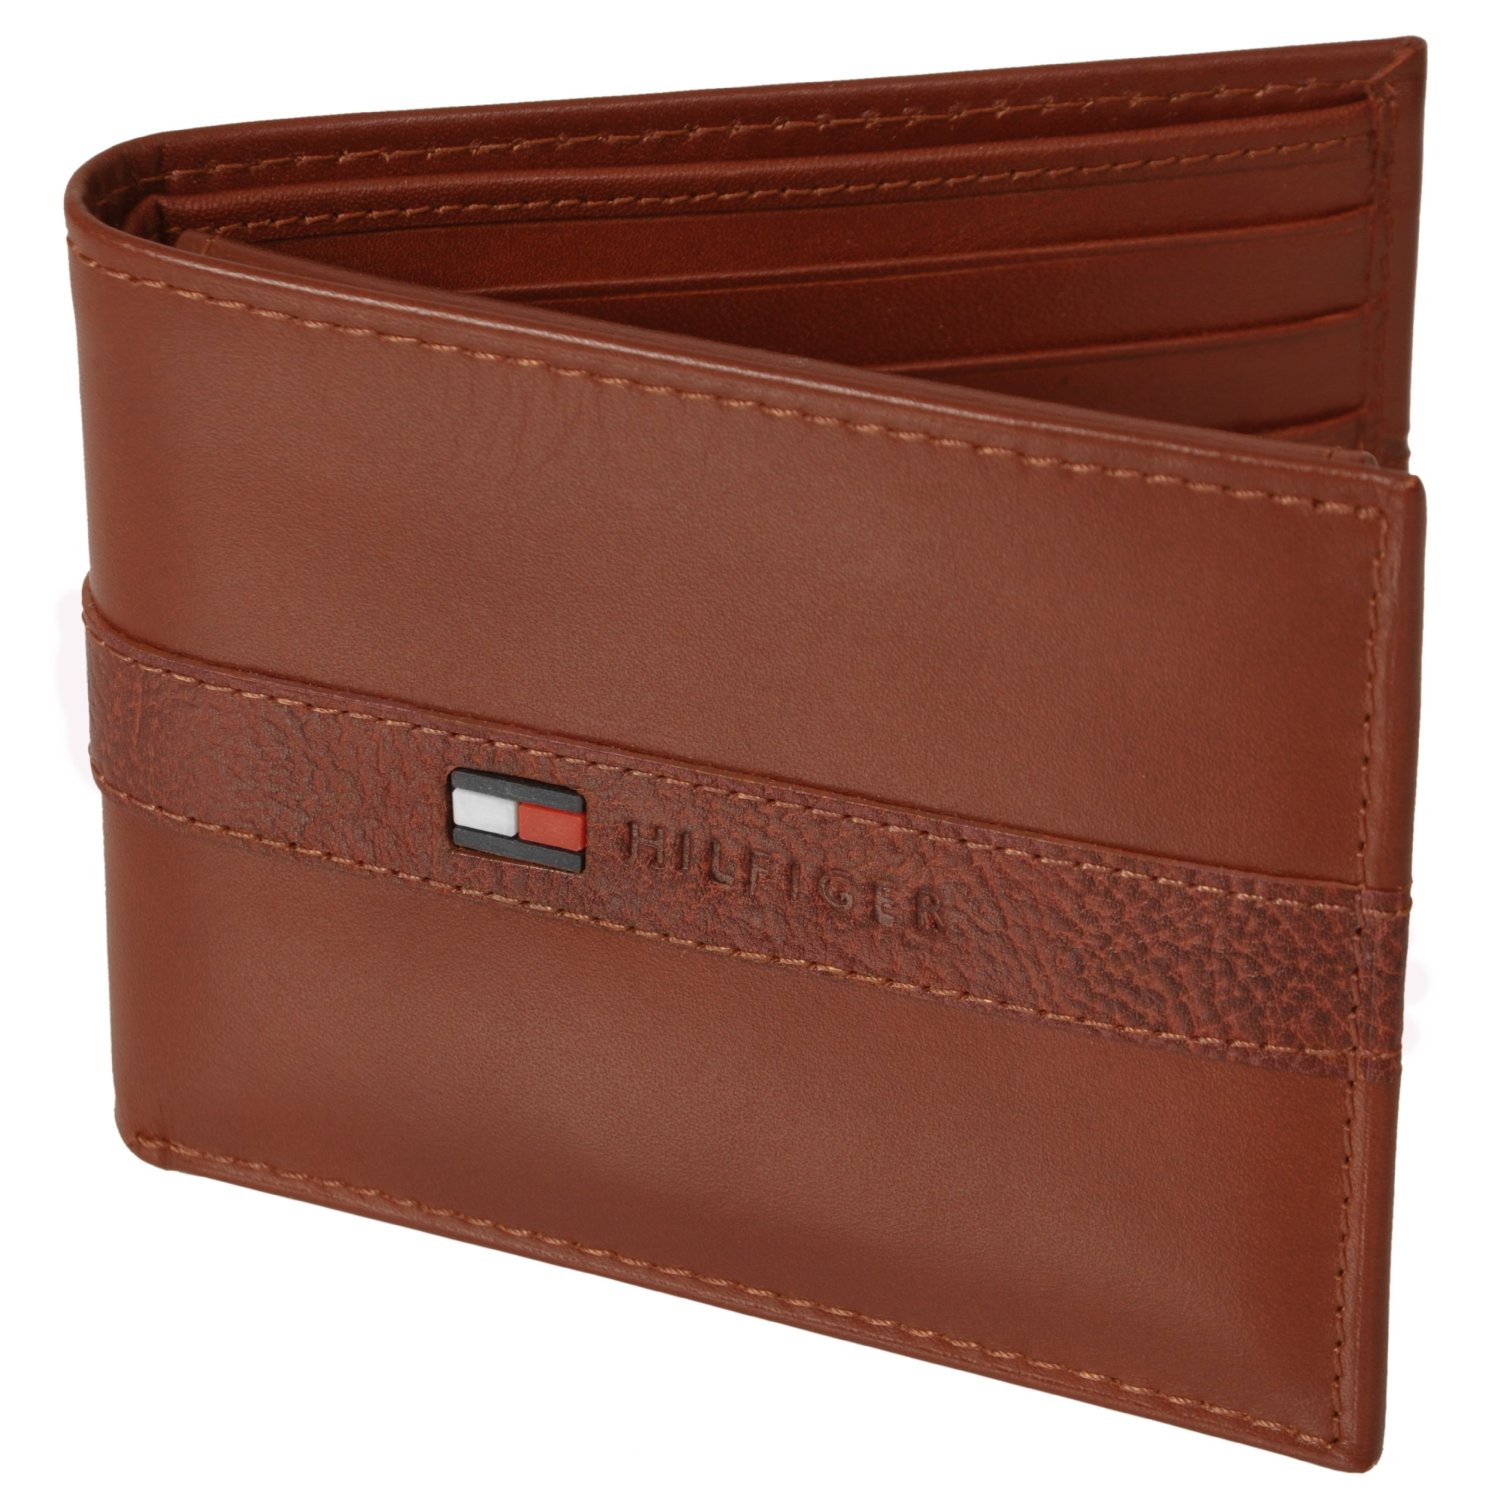 BegCanteq: Item # 1025: Tommy Hilfiger Mens Genuine Leather Passcase and Valet Wallet